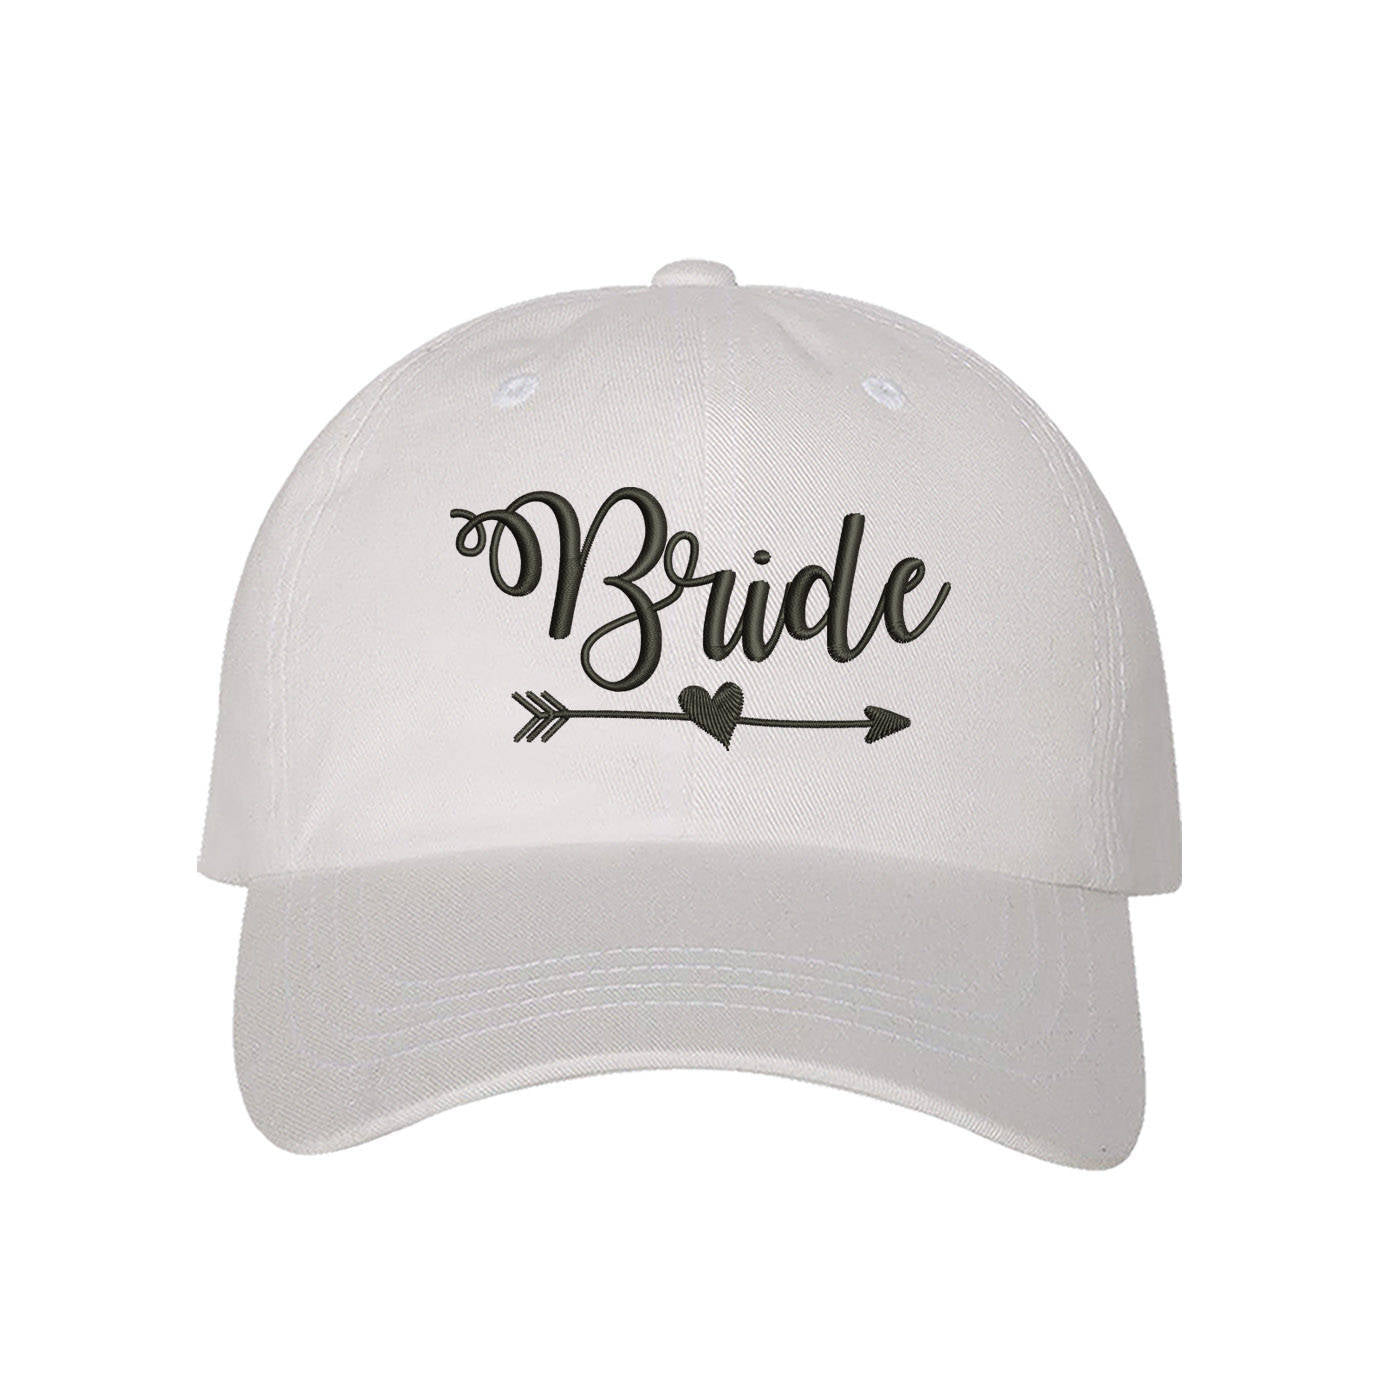 Bride and Squad Dad Hat Set, Embroidered Bride and Squad Dad Hats, Baseball Hat, Bridal Hats, Bride Hats, Bachelorette Hats, Embroidered Hat, Custom Embroidery, DSY Lifestyle Hat, Black Dad Hat, White Dad Hat, Made in LA 